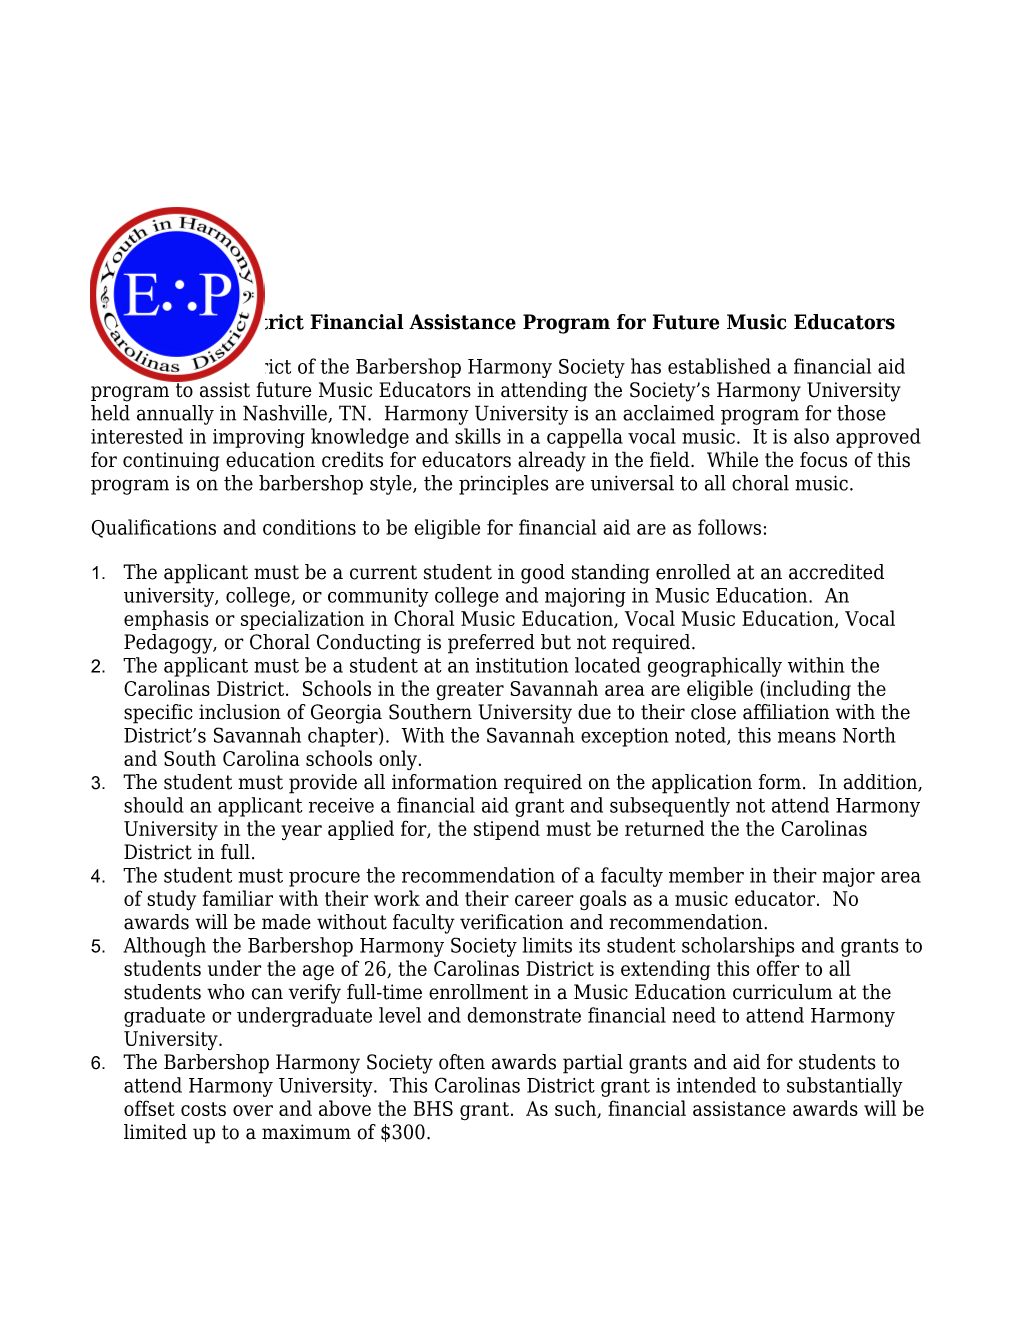 Carolinas District Financial Assistance Program for Future Music Educators